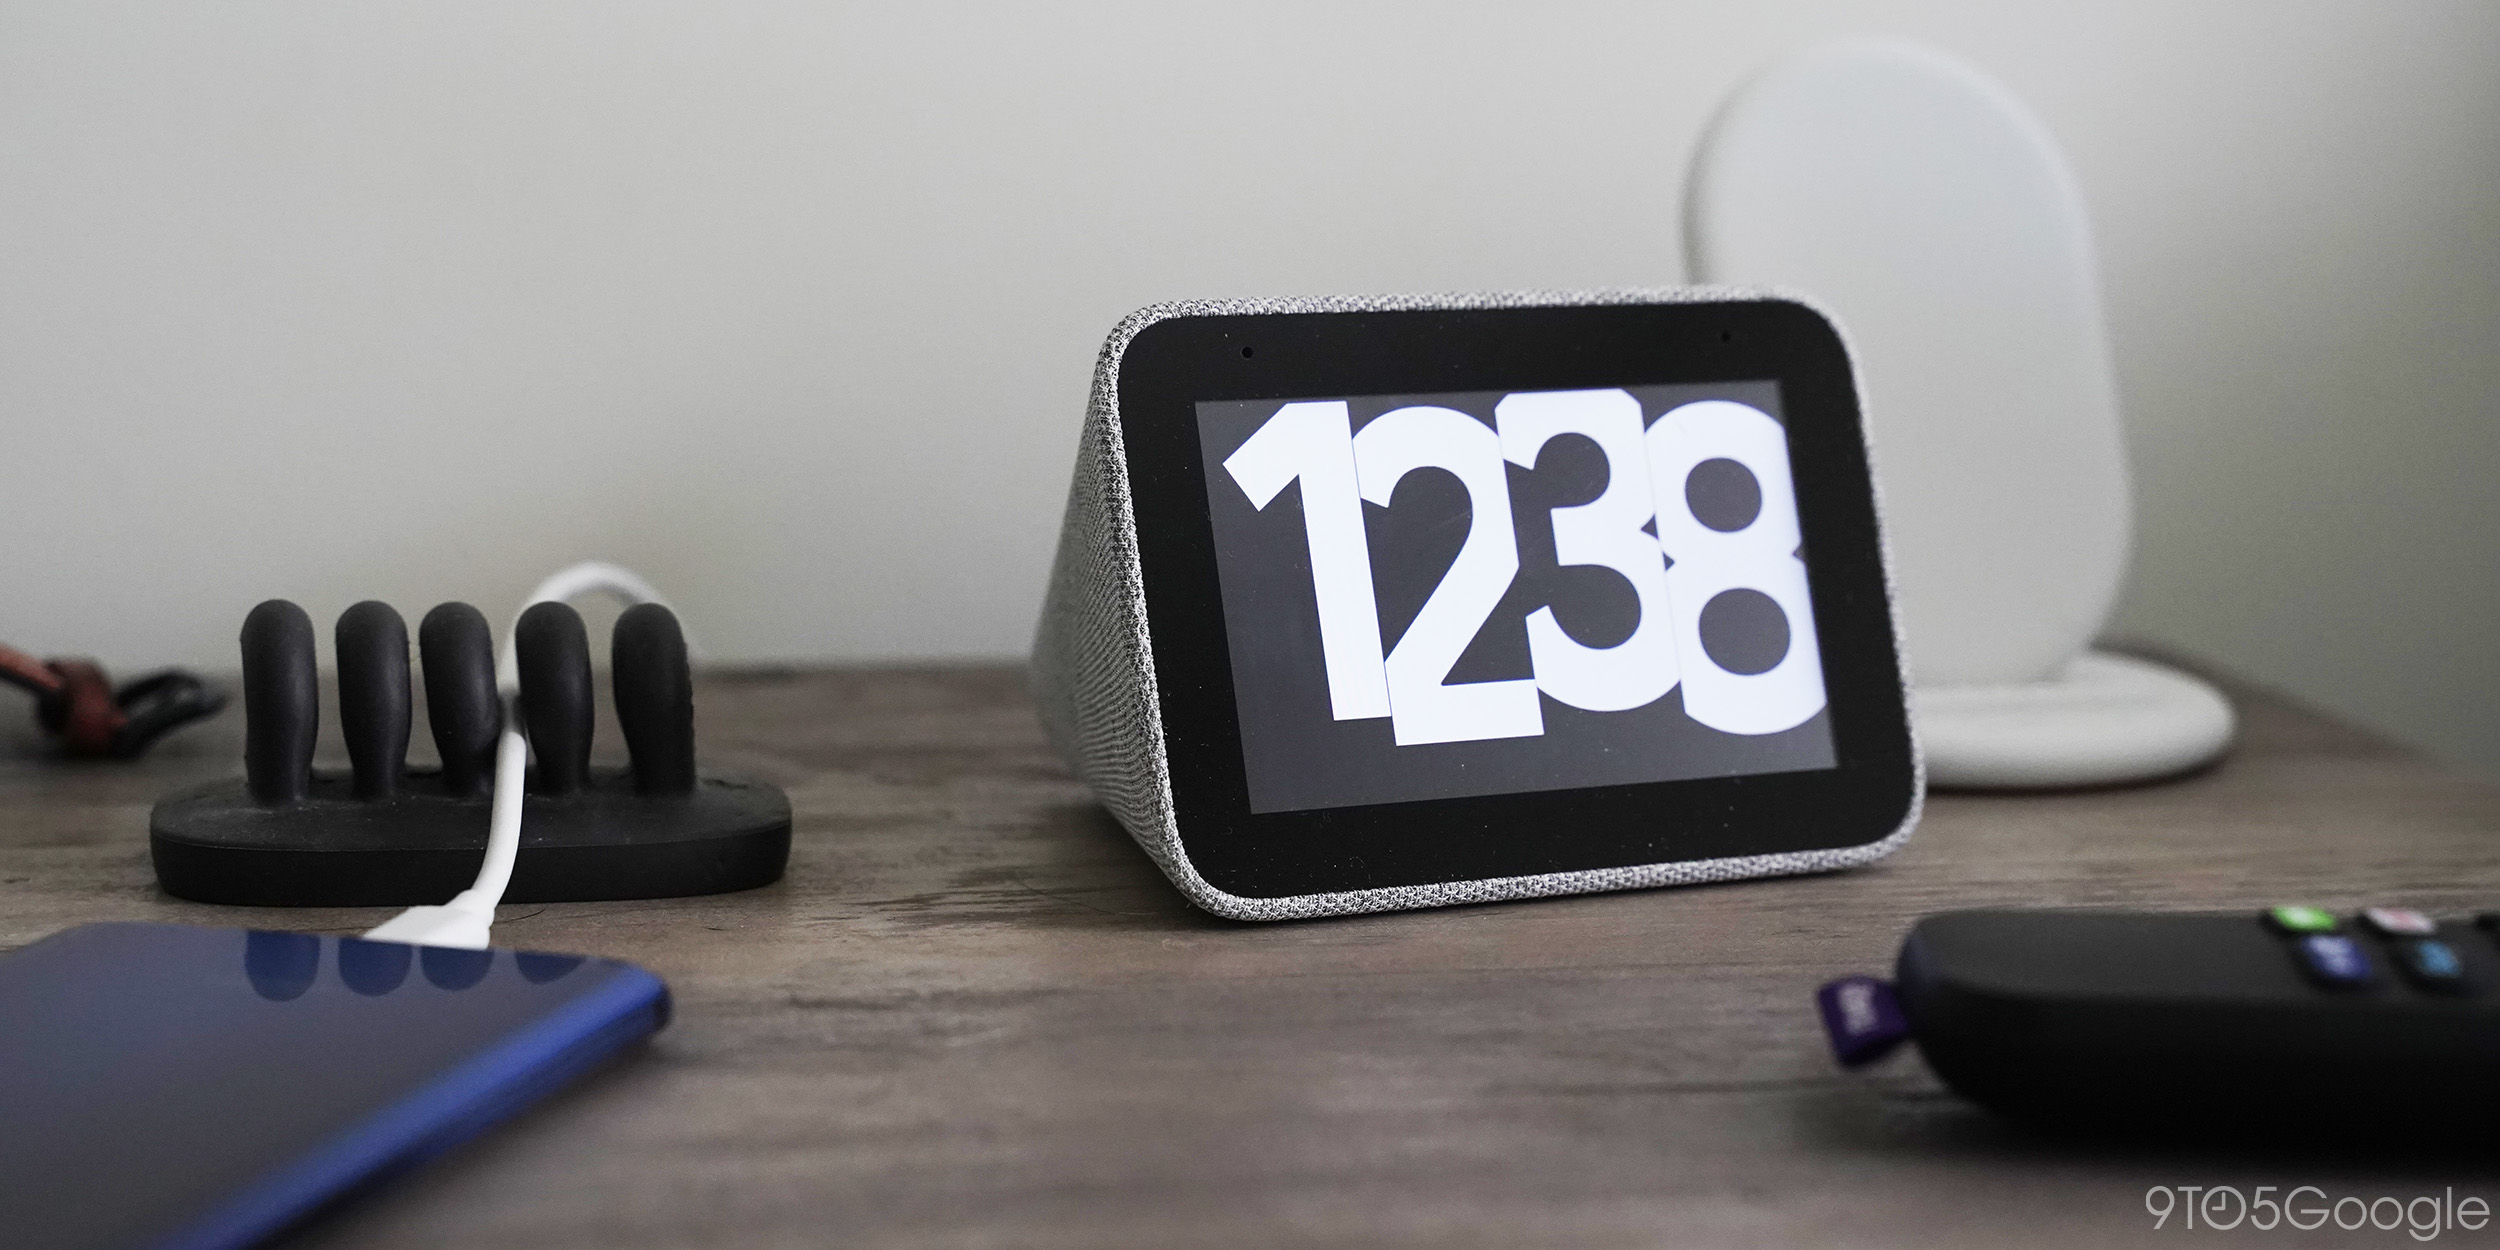 lenovo smart clock google assistant display bedroom table